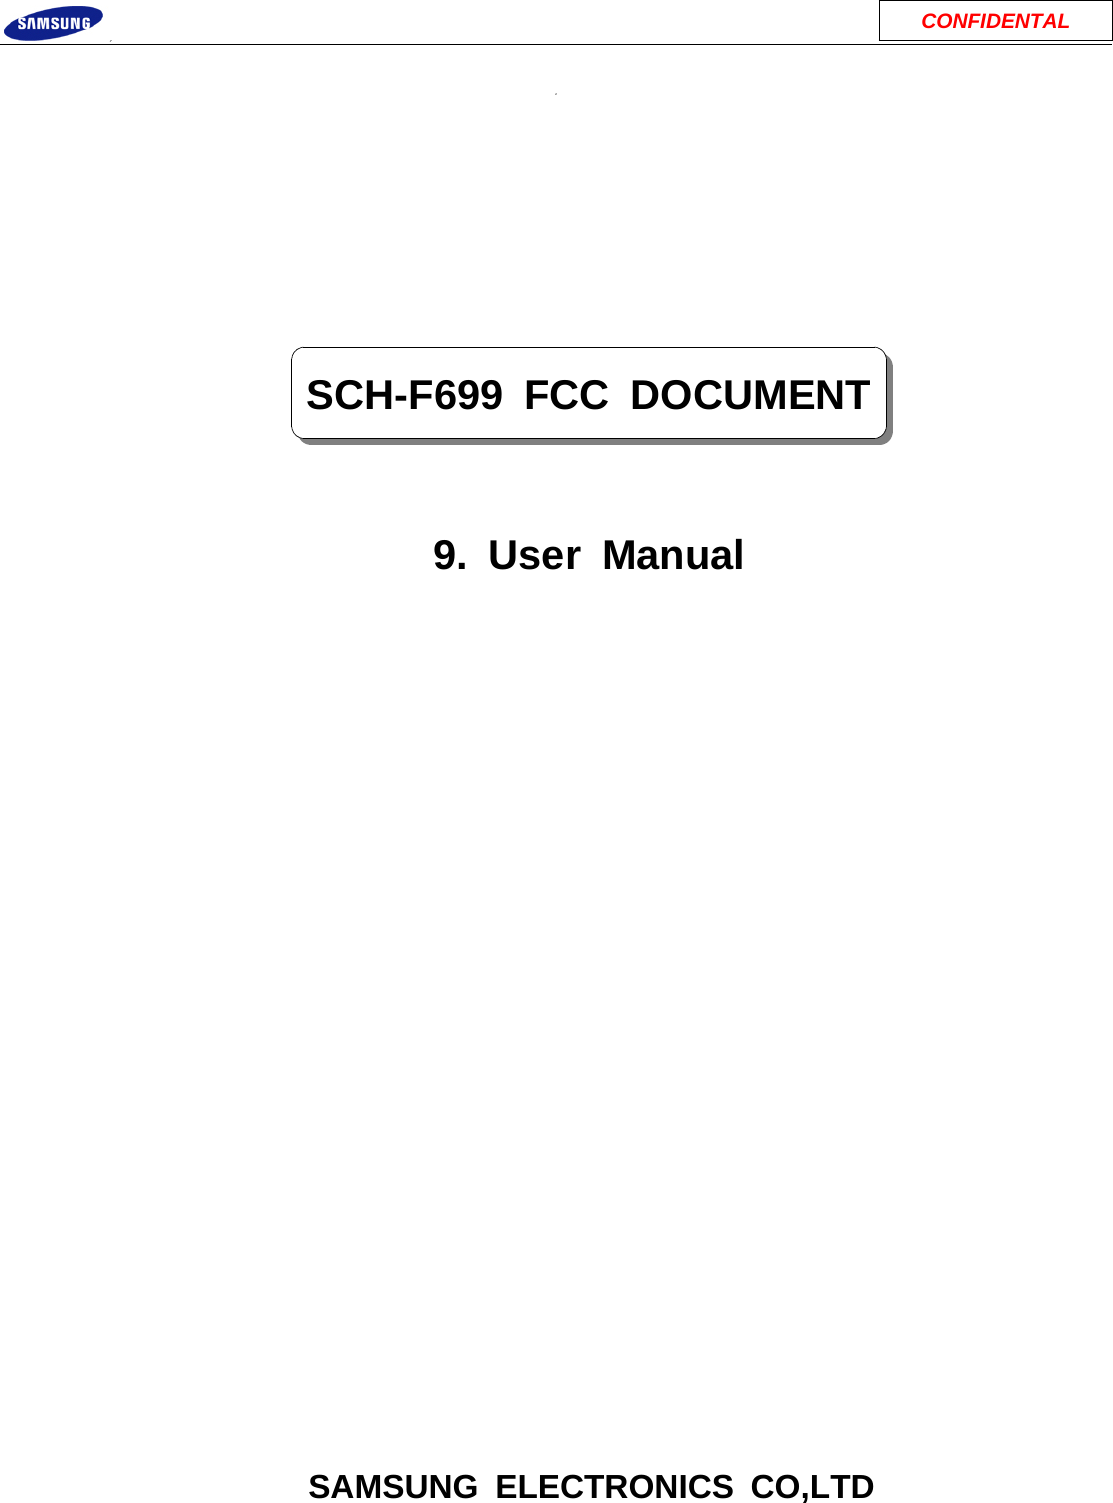 SAMSUNG ELECTRONICS CO,LTD9. User ManualSCH-F699 FCC DOCUMENTCONFIDENTAL